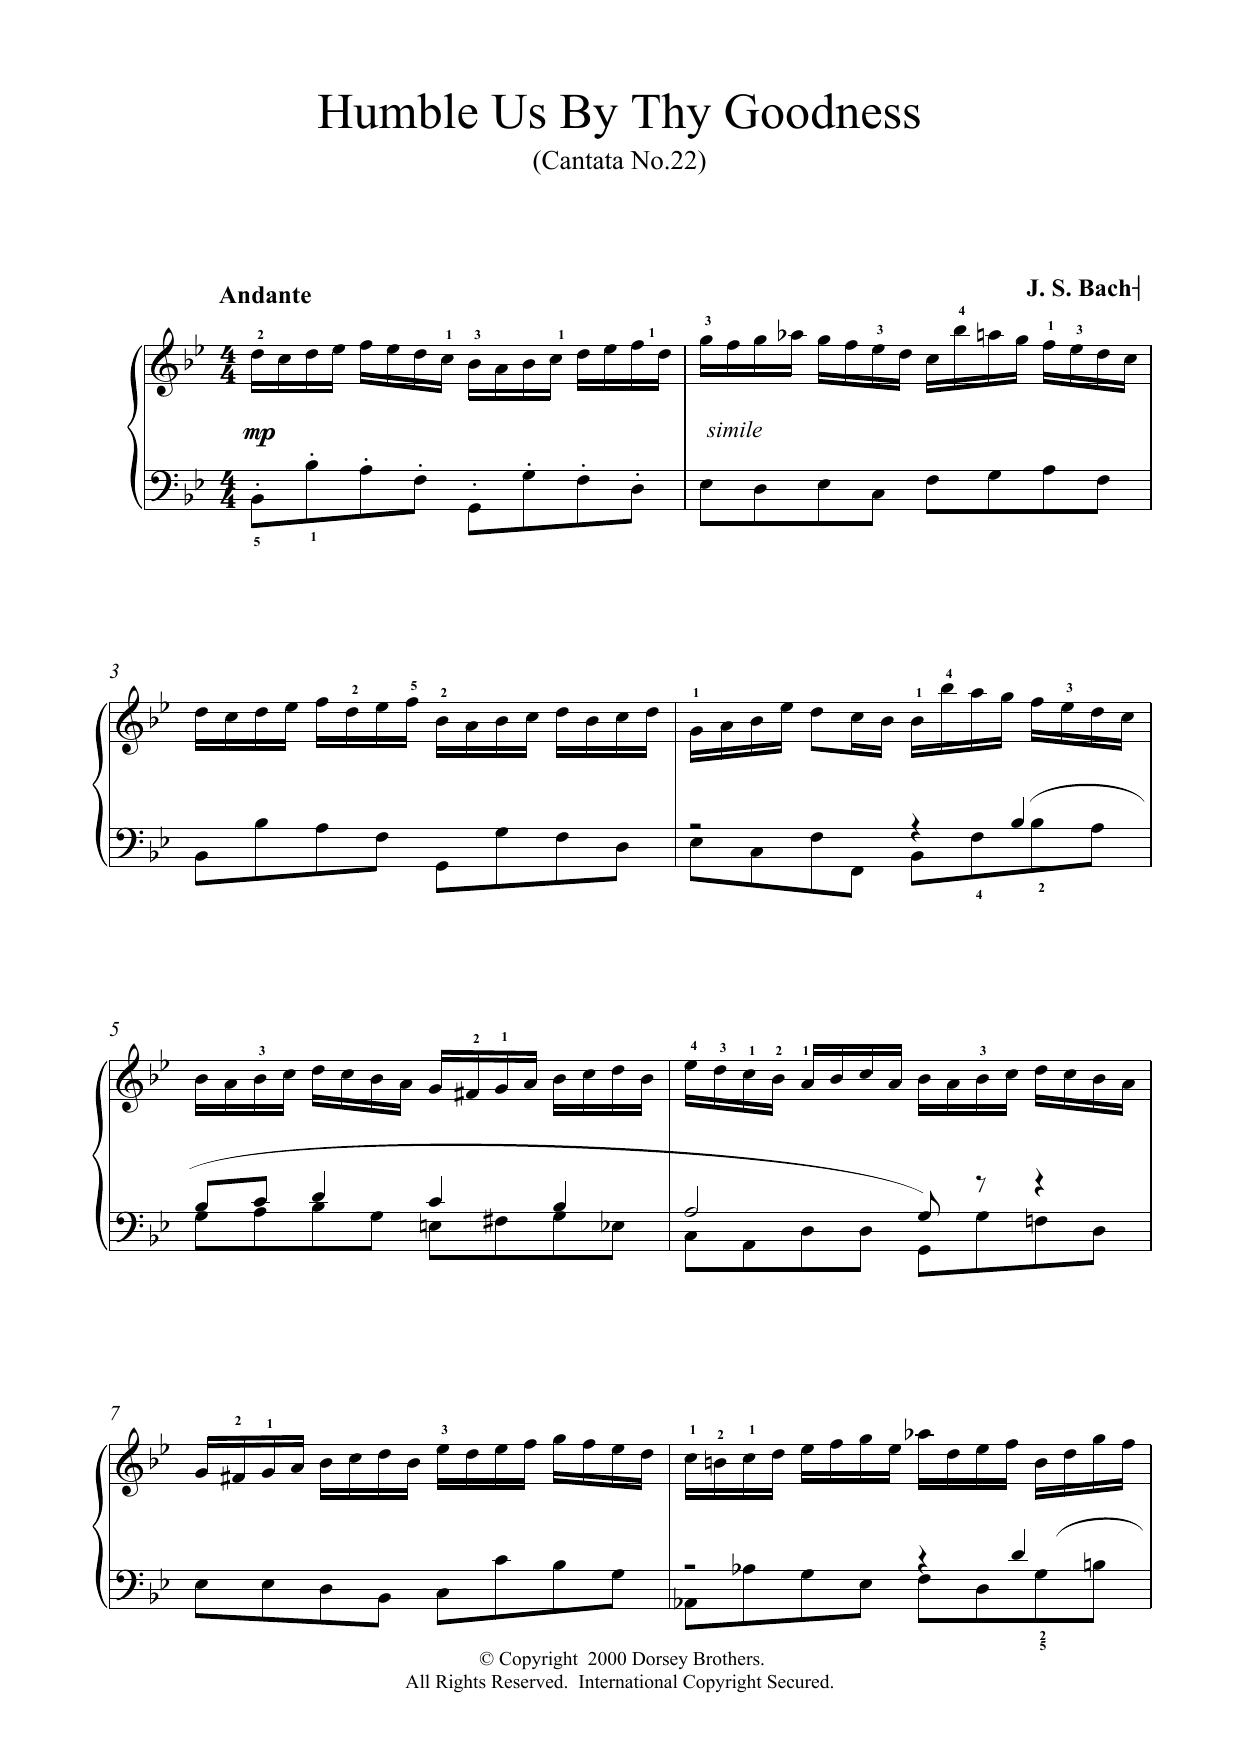 Johann Sebastian Bach Humble Us By Thy Goodness sheet music notes printable PDF score